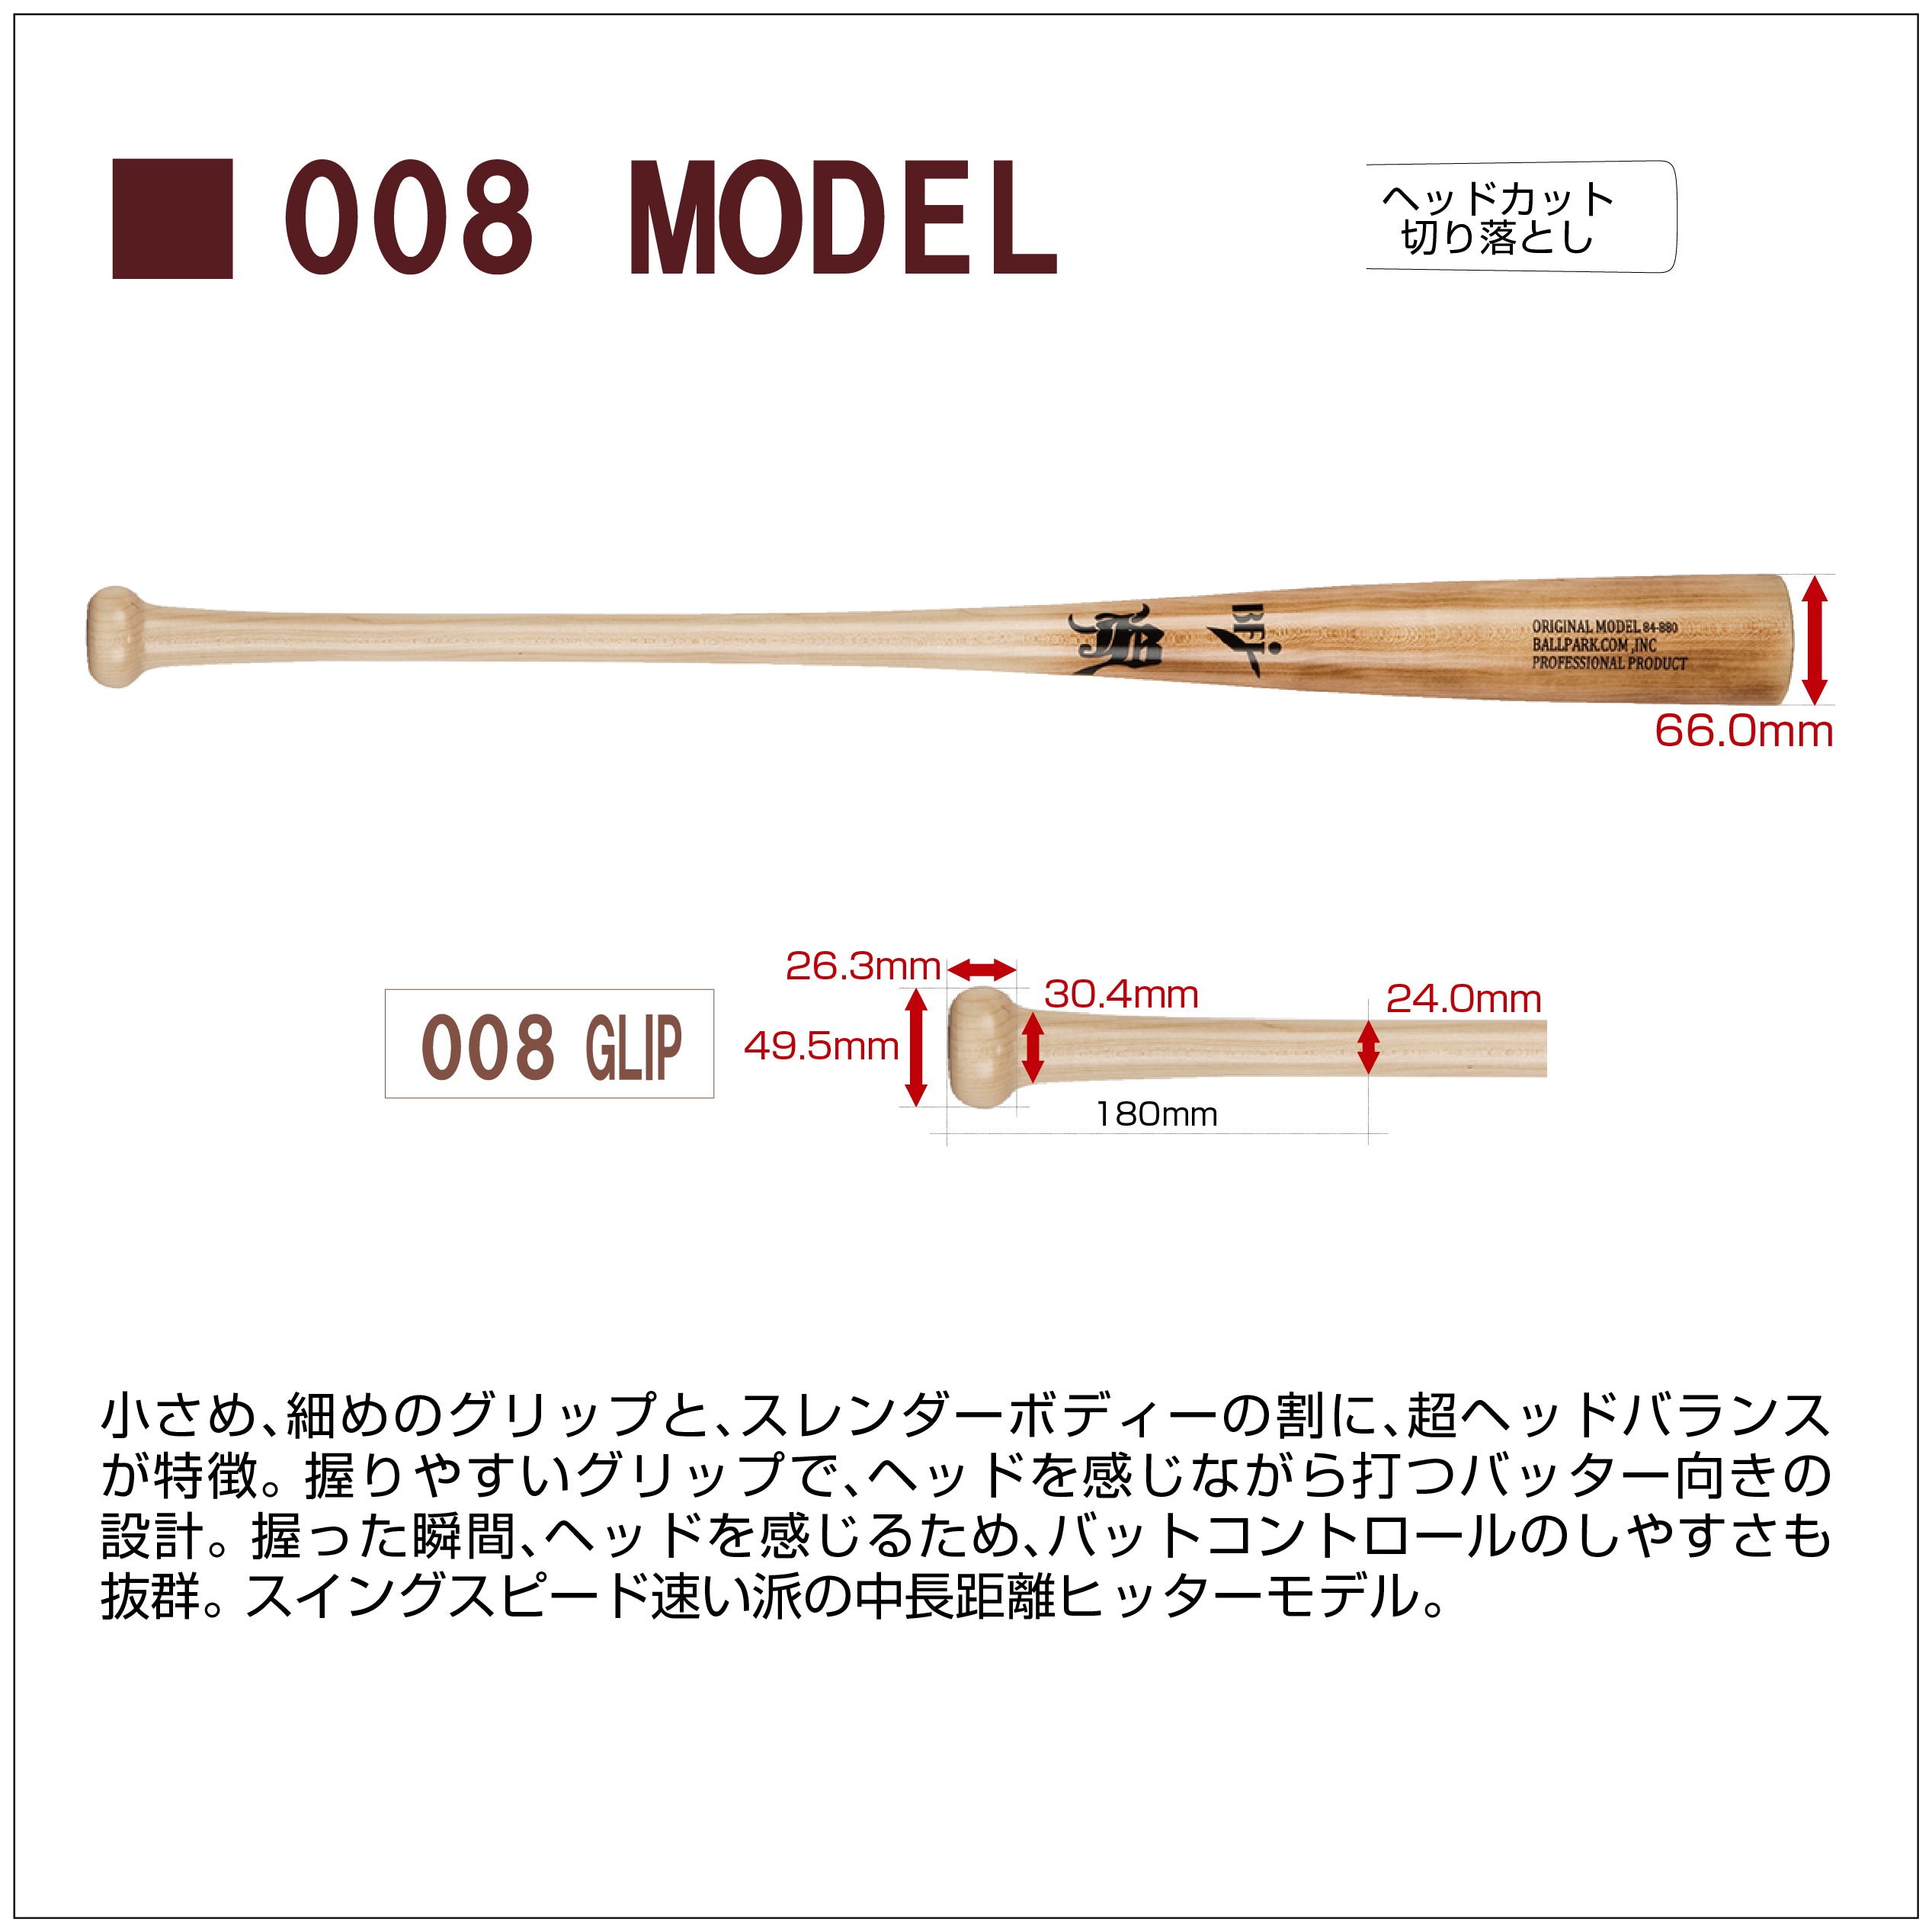 85cm] Wagyu beef JB bat/Maple from North America/hard wooden/BFJ 